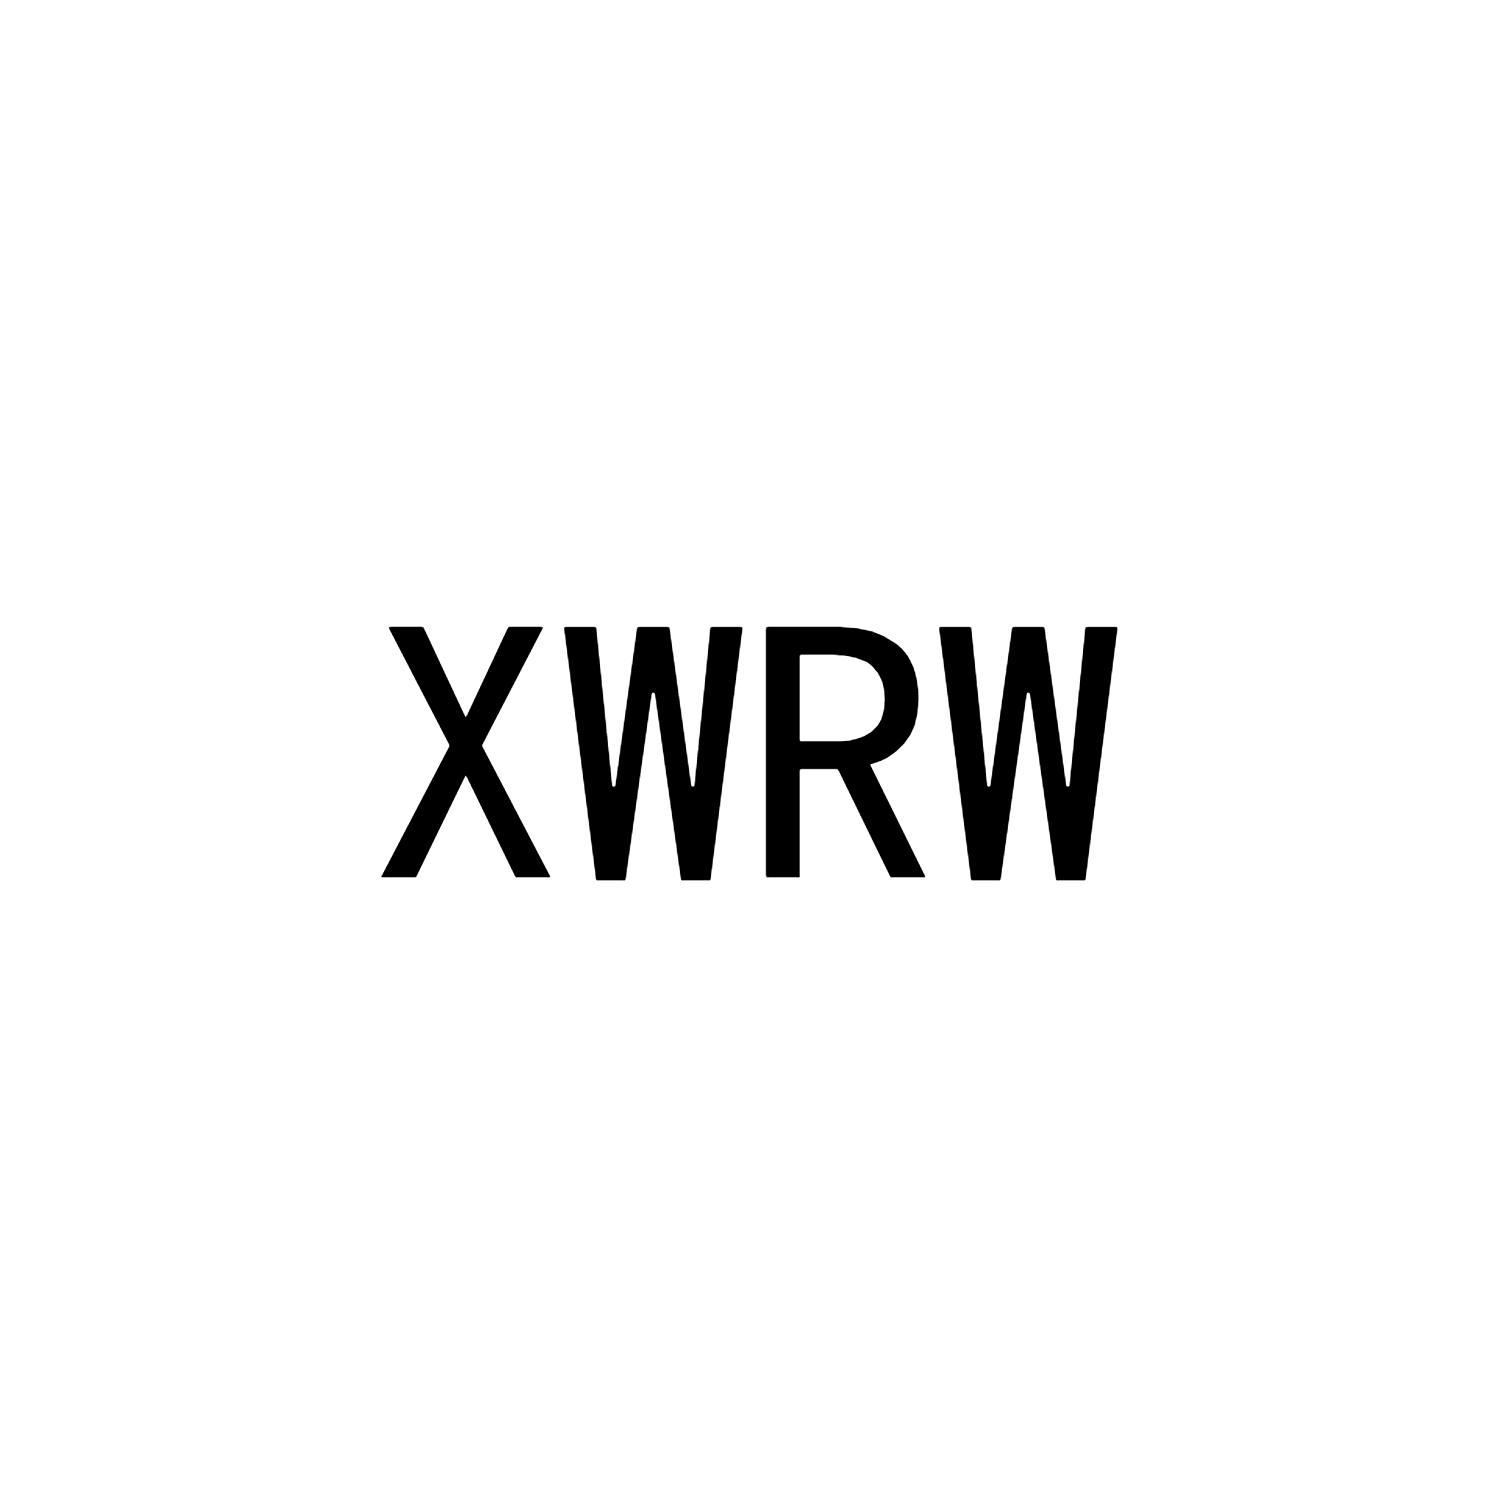 XWRW